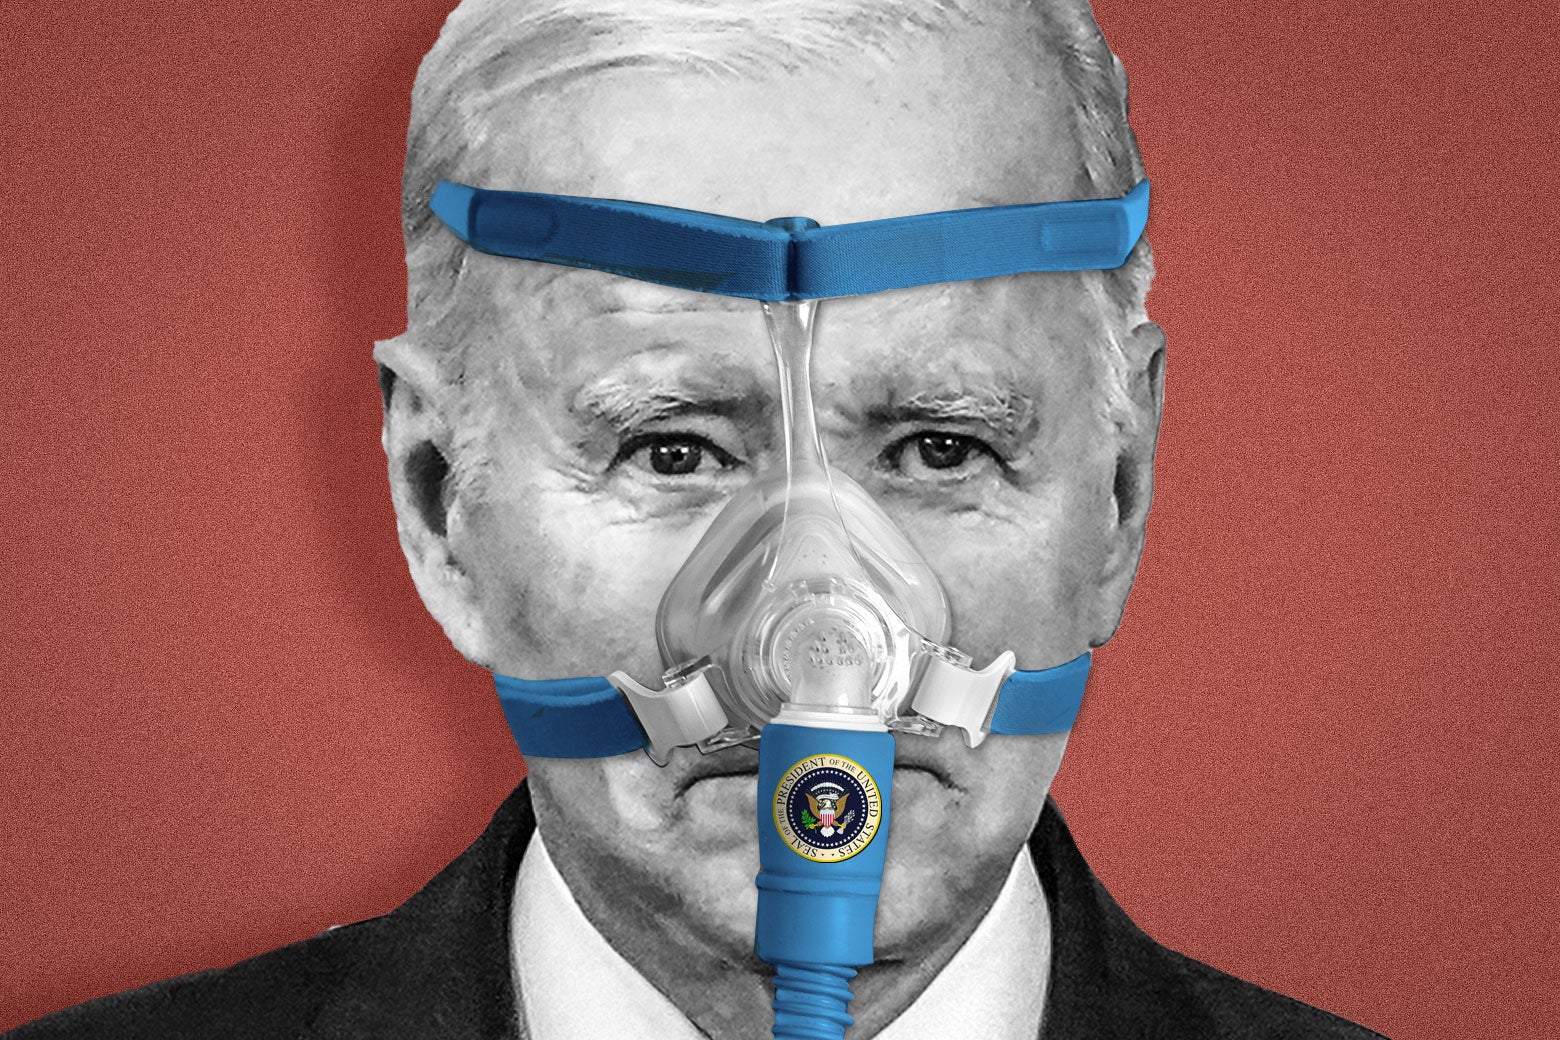 Biden Uses a CPAP. What’s a CPAP?